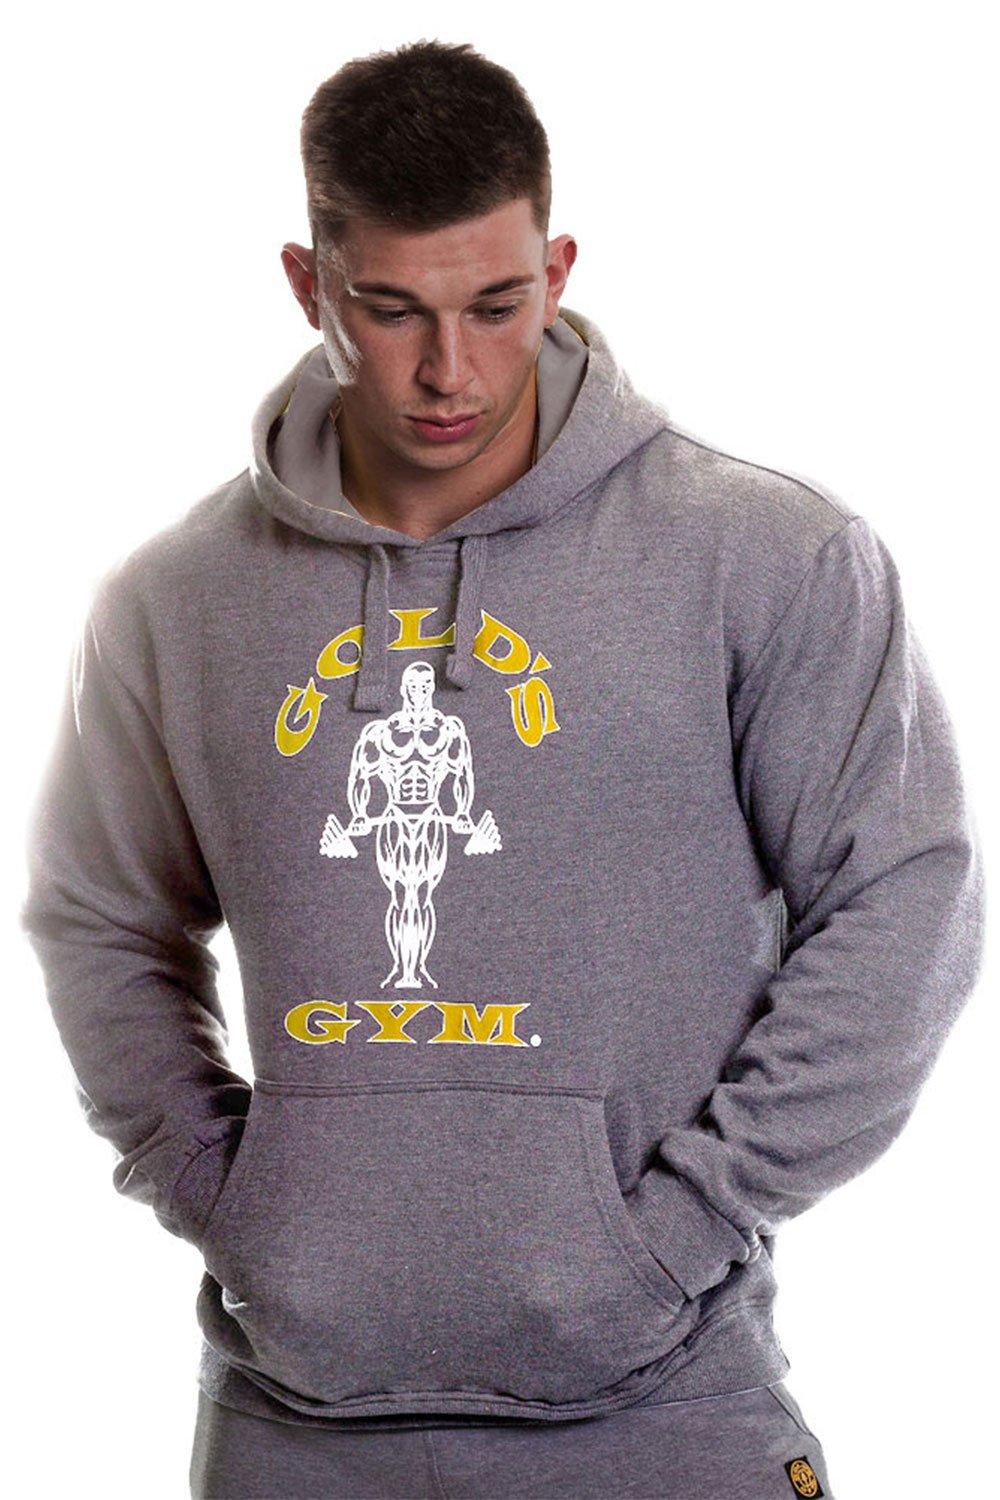 Пуловер с принтом Muscle Joe, худи Gold's Gym, серый